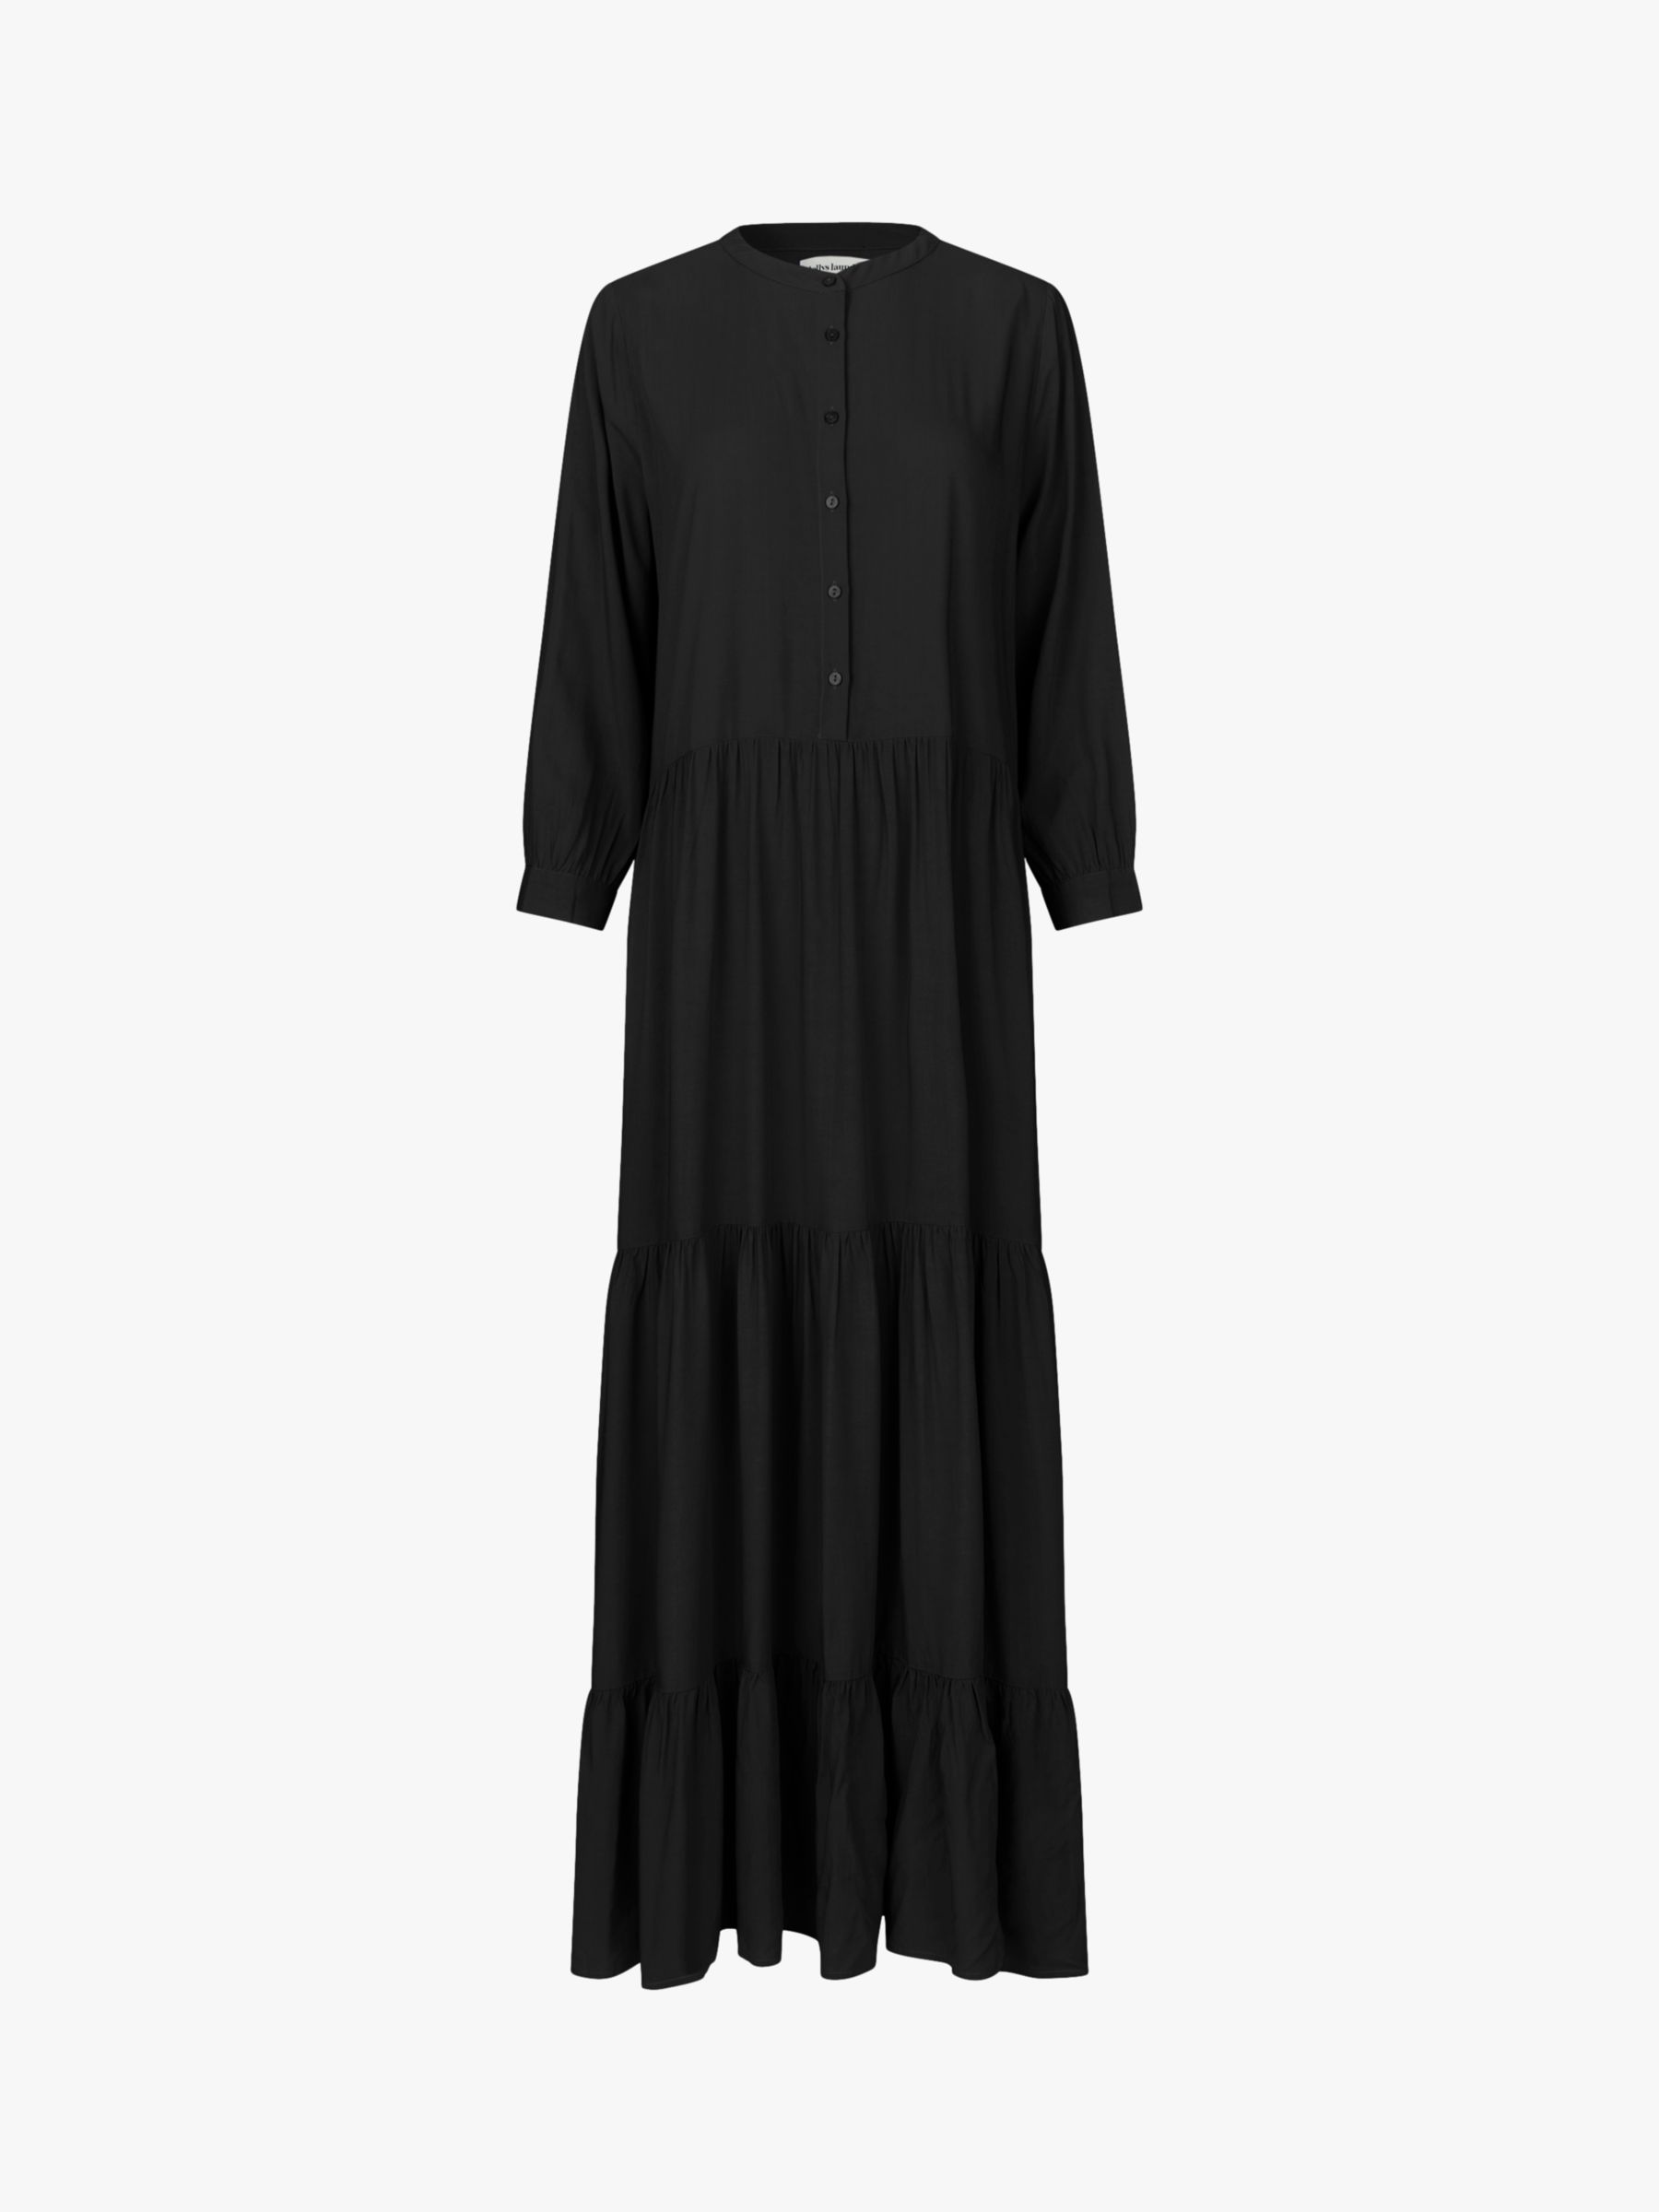 Lollys Laundry Nee Tiered Maxi Dress, Black, S